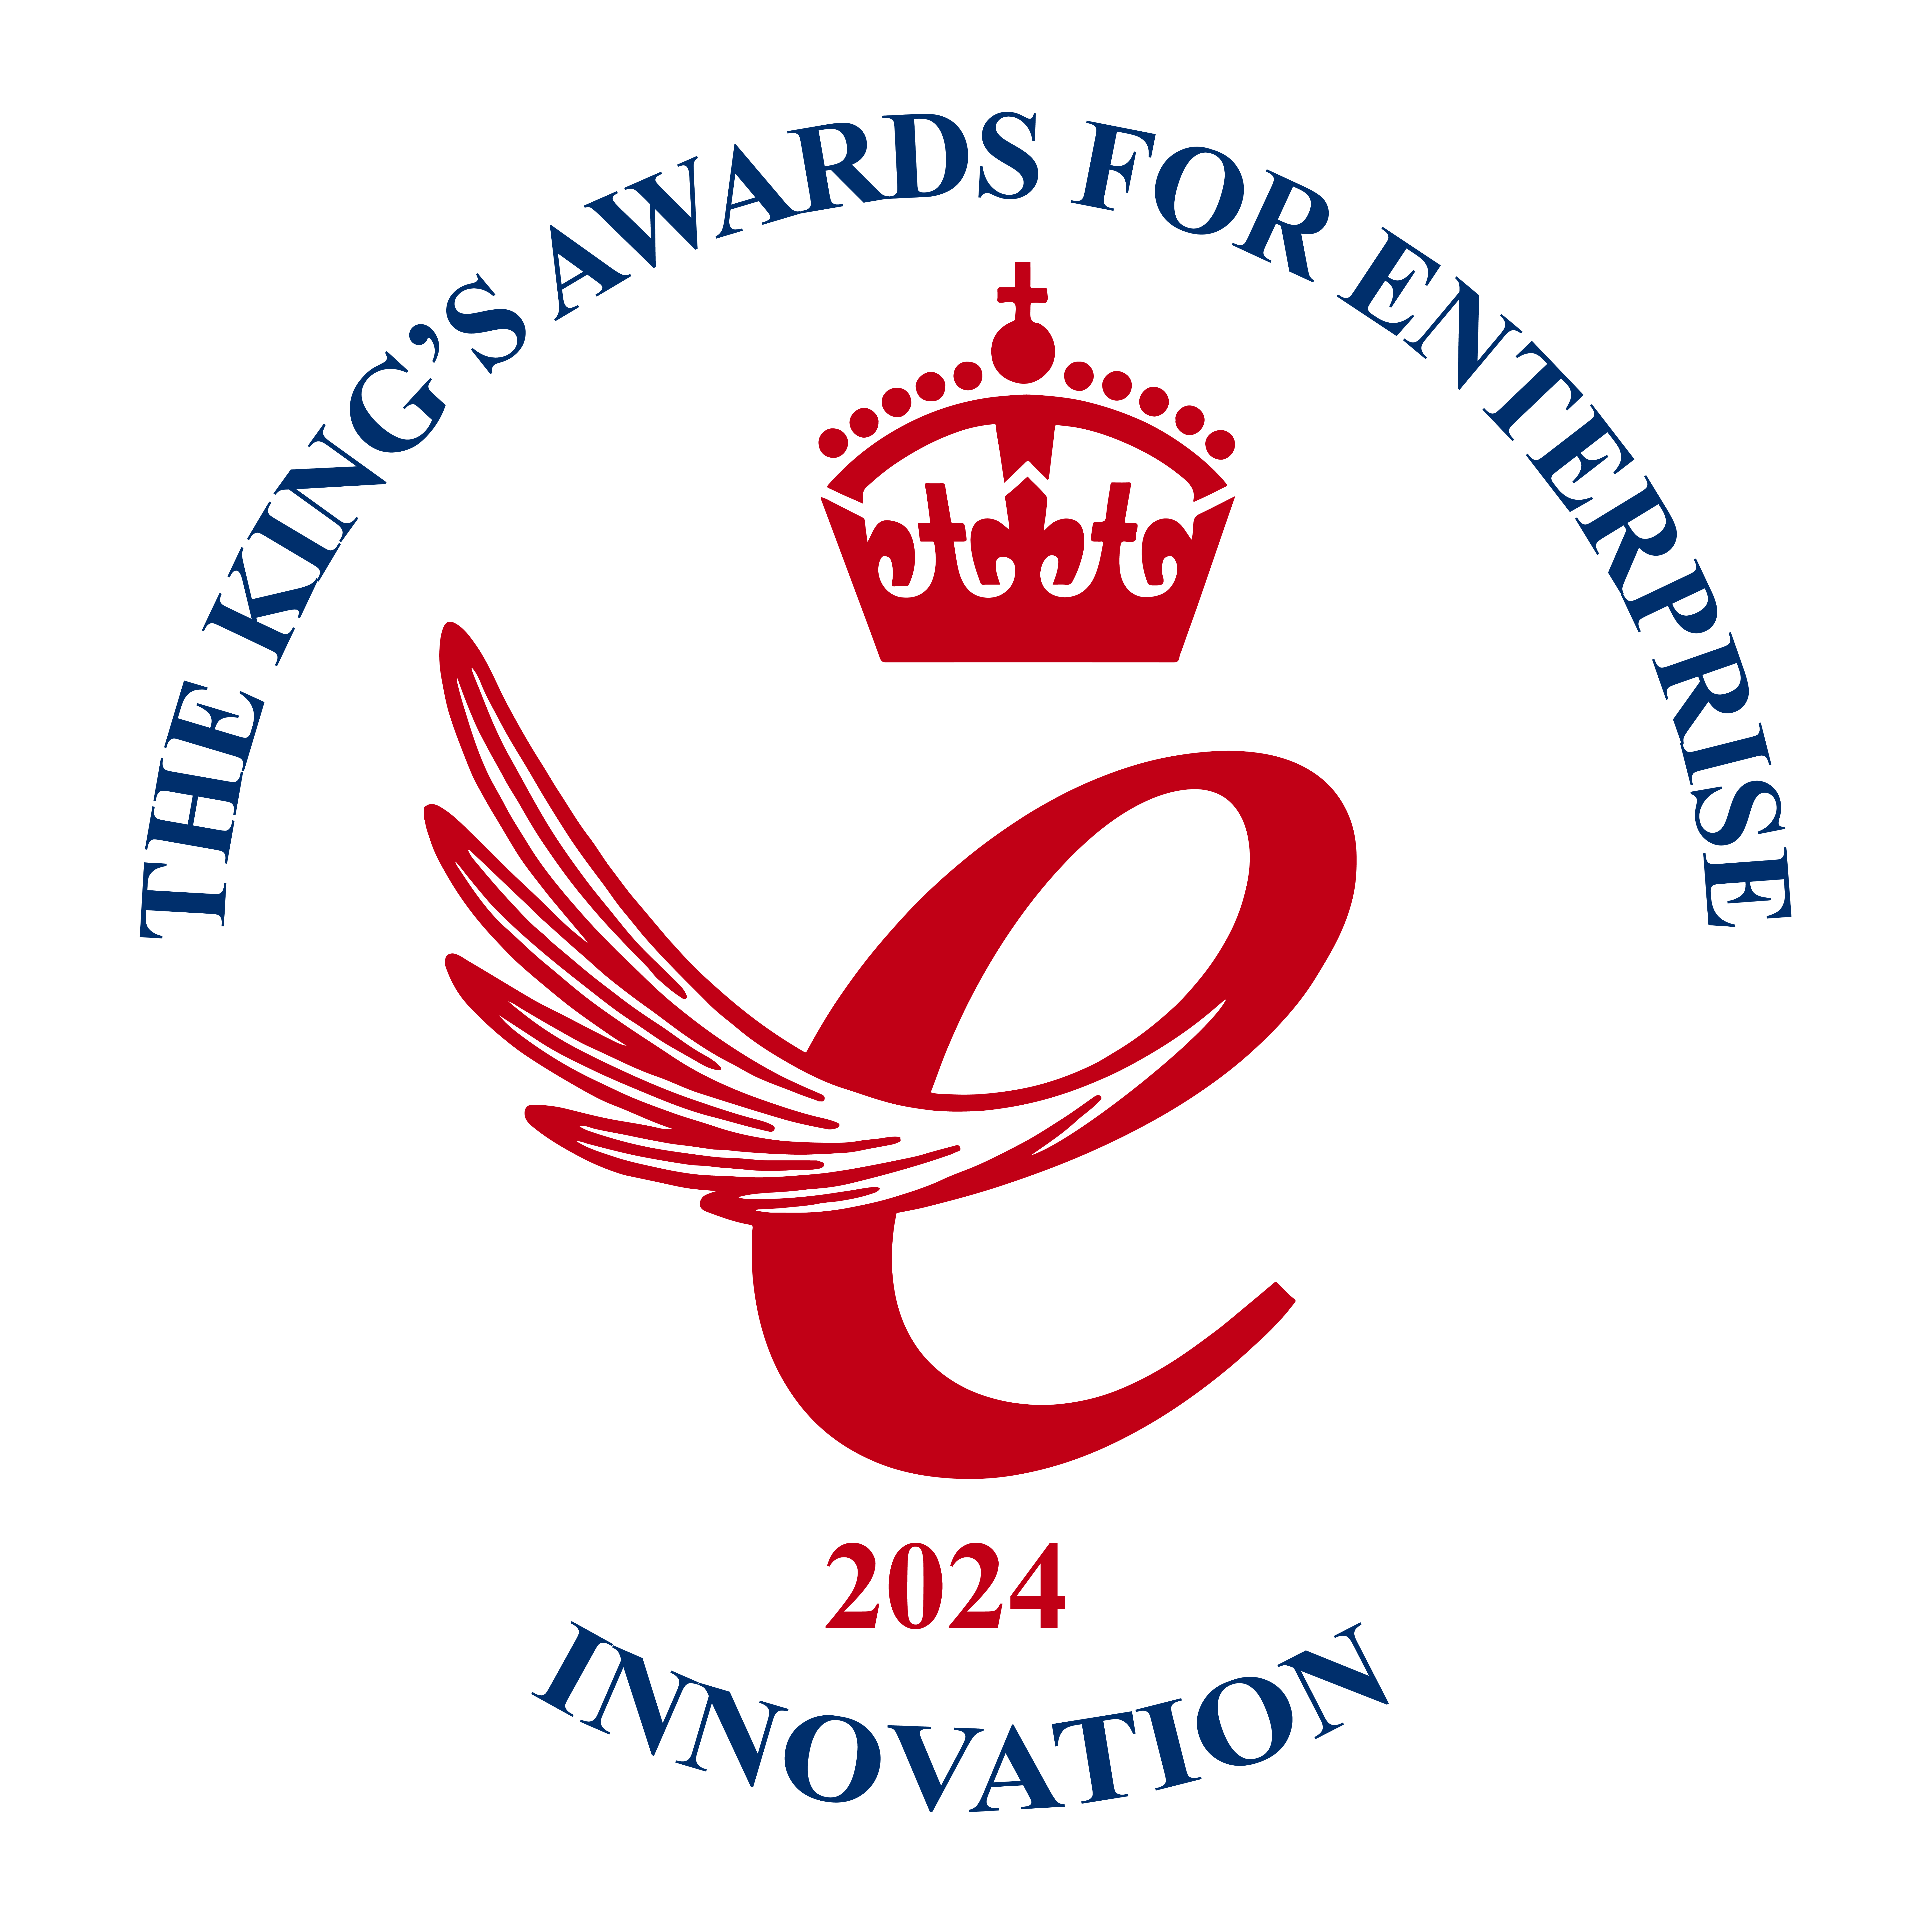 King’s Award for Enterprise 2024 awarded to conveyancing platform